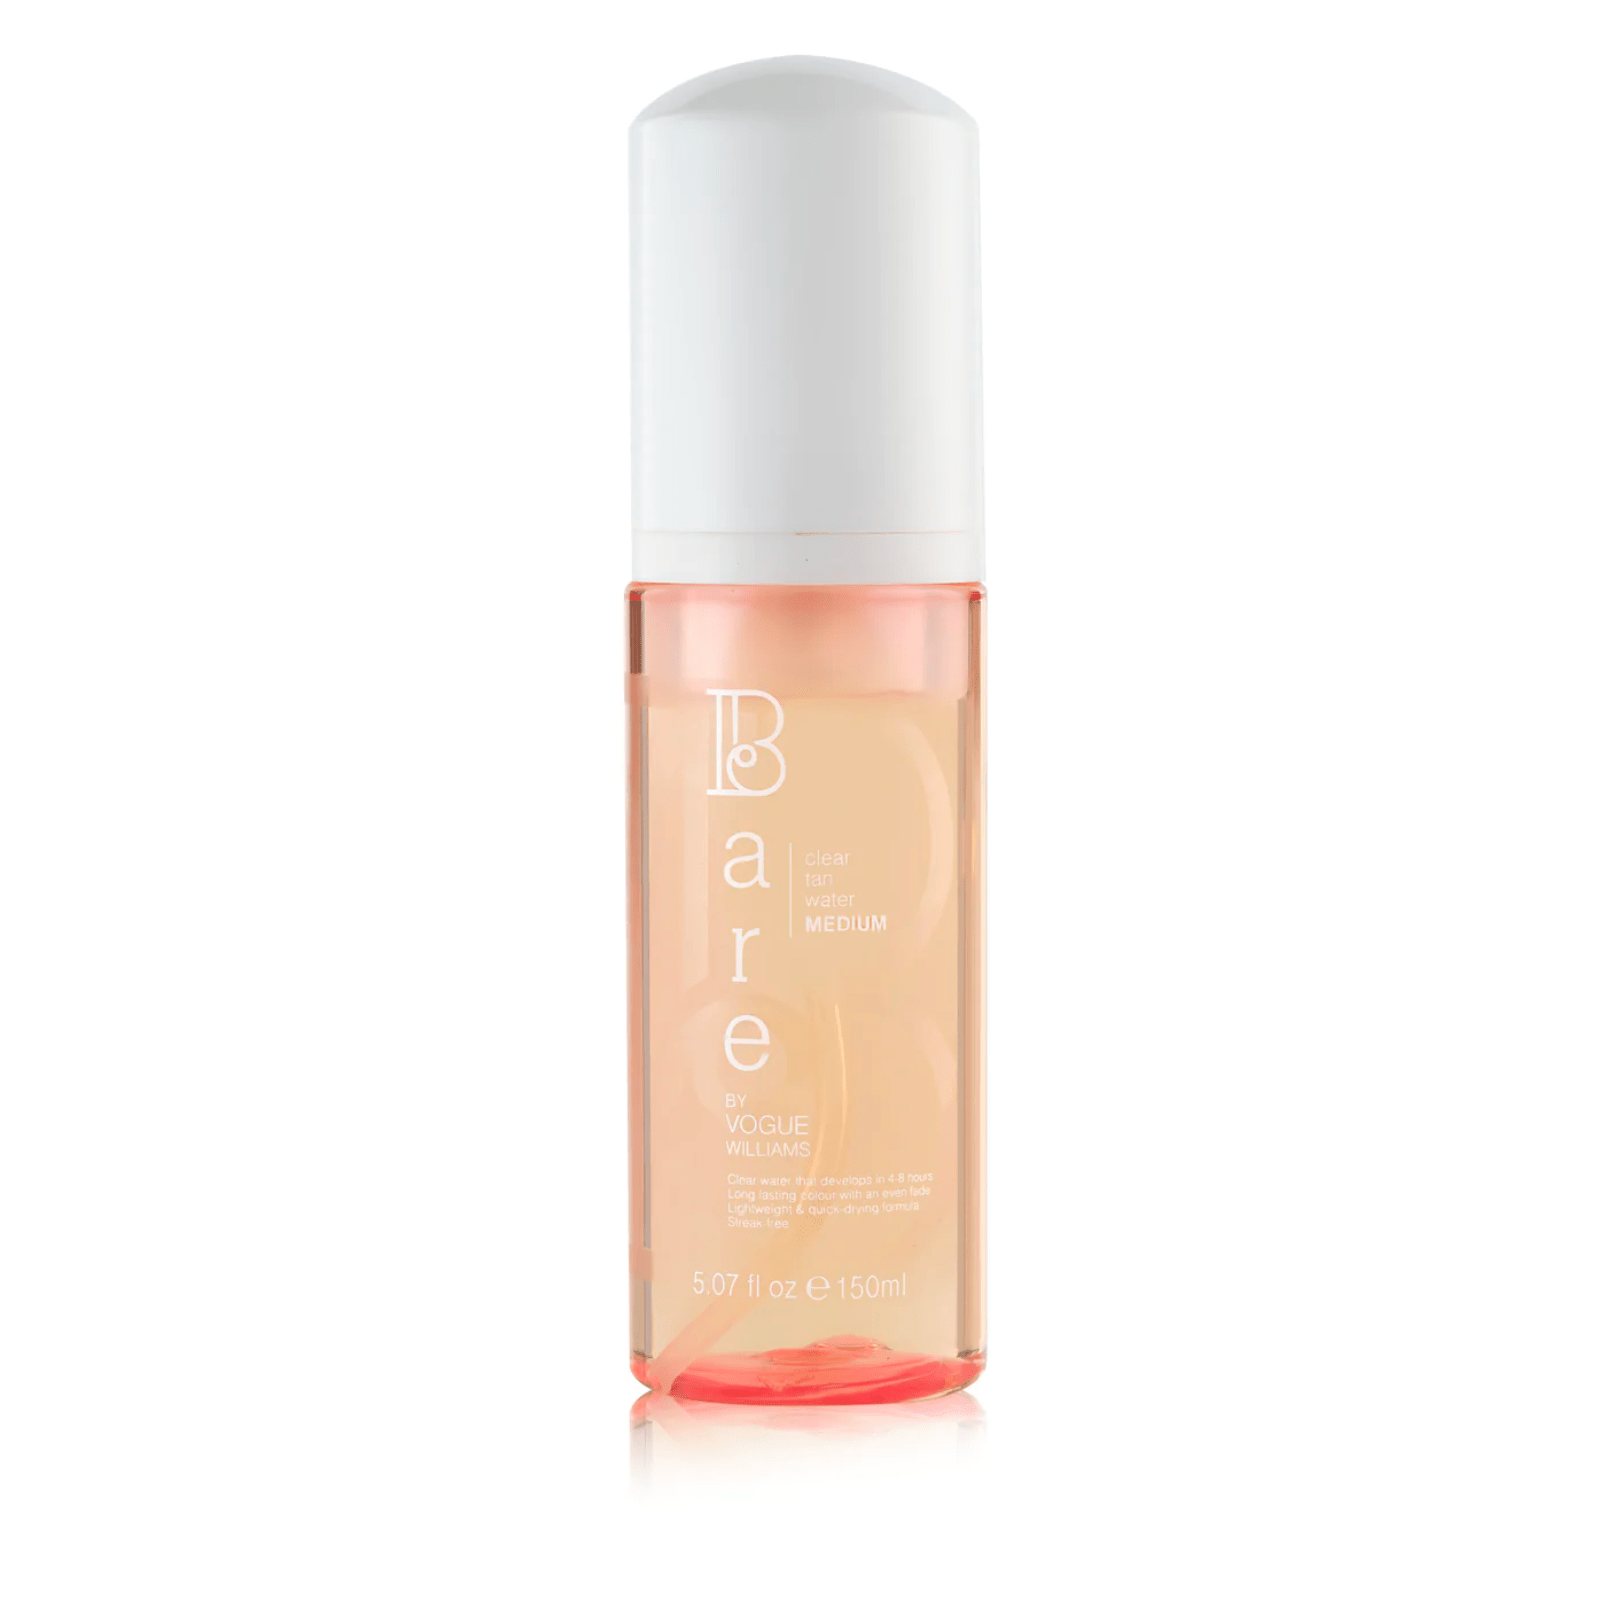 Bare by Vogue Clear Tan Water Medium | 150ml - SkinShop